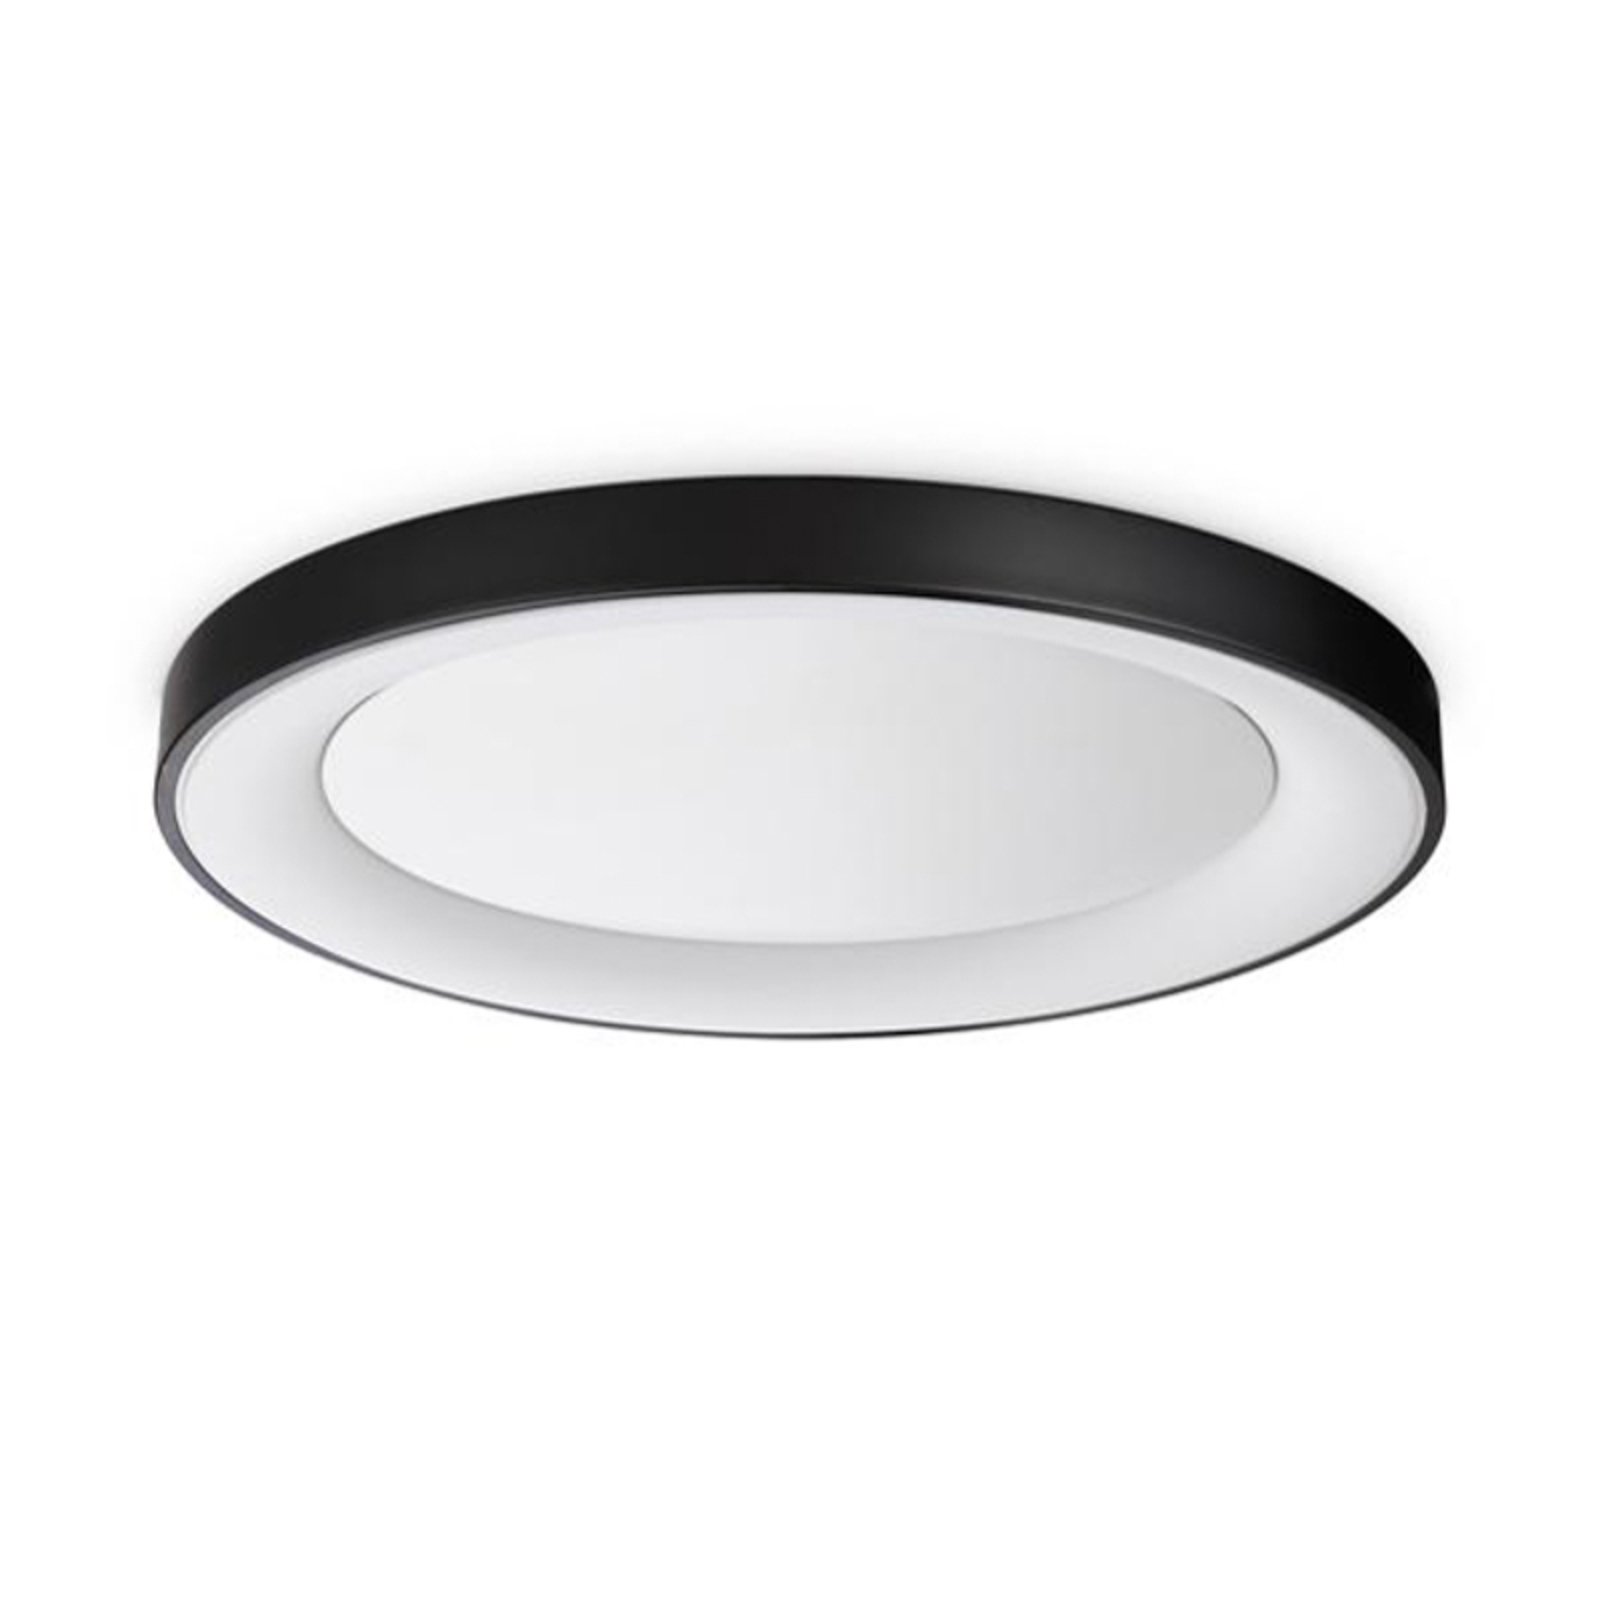 Ideal Lux LED stropné svietidlo Planet, čierne, Ø 60 cm, kov